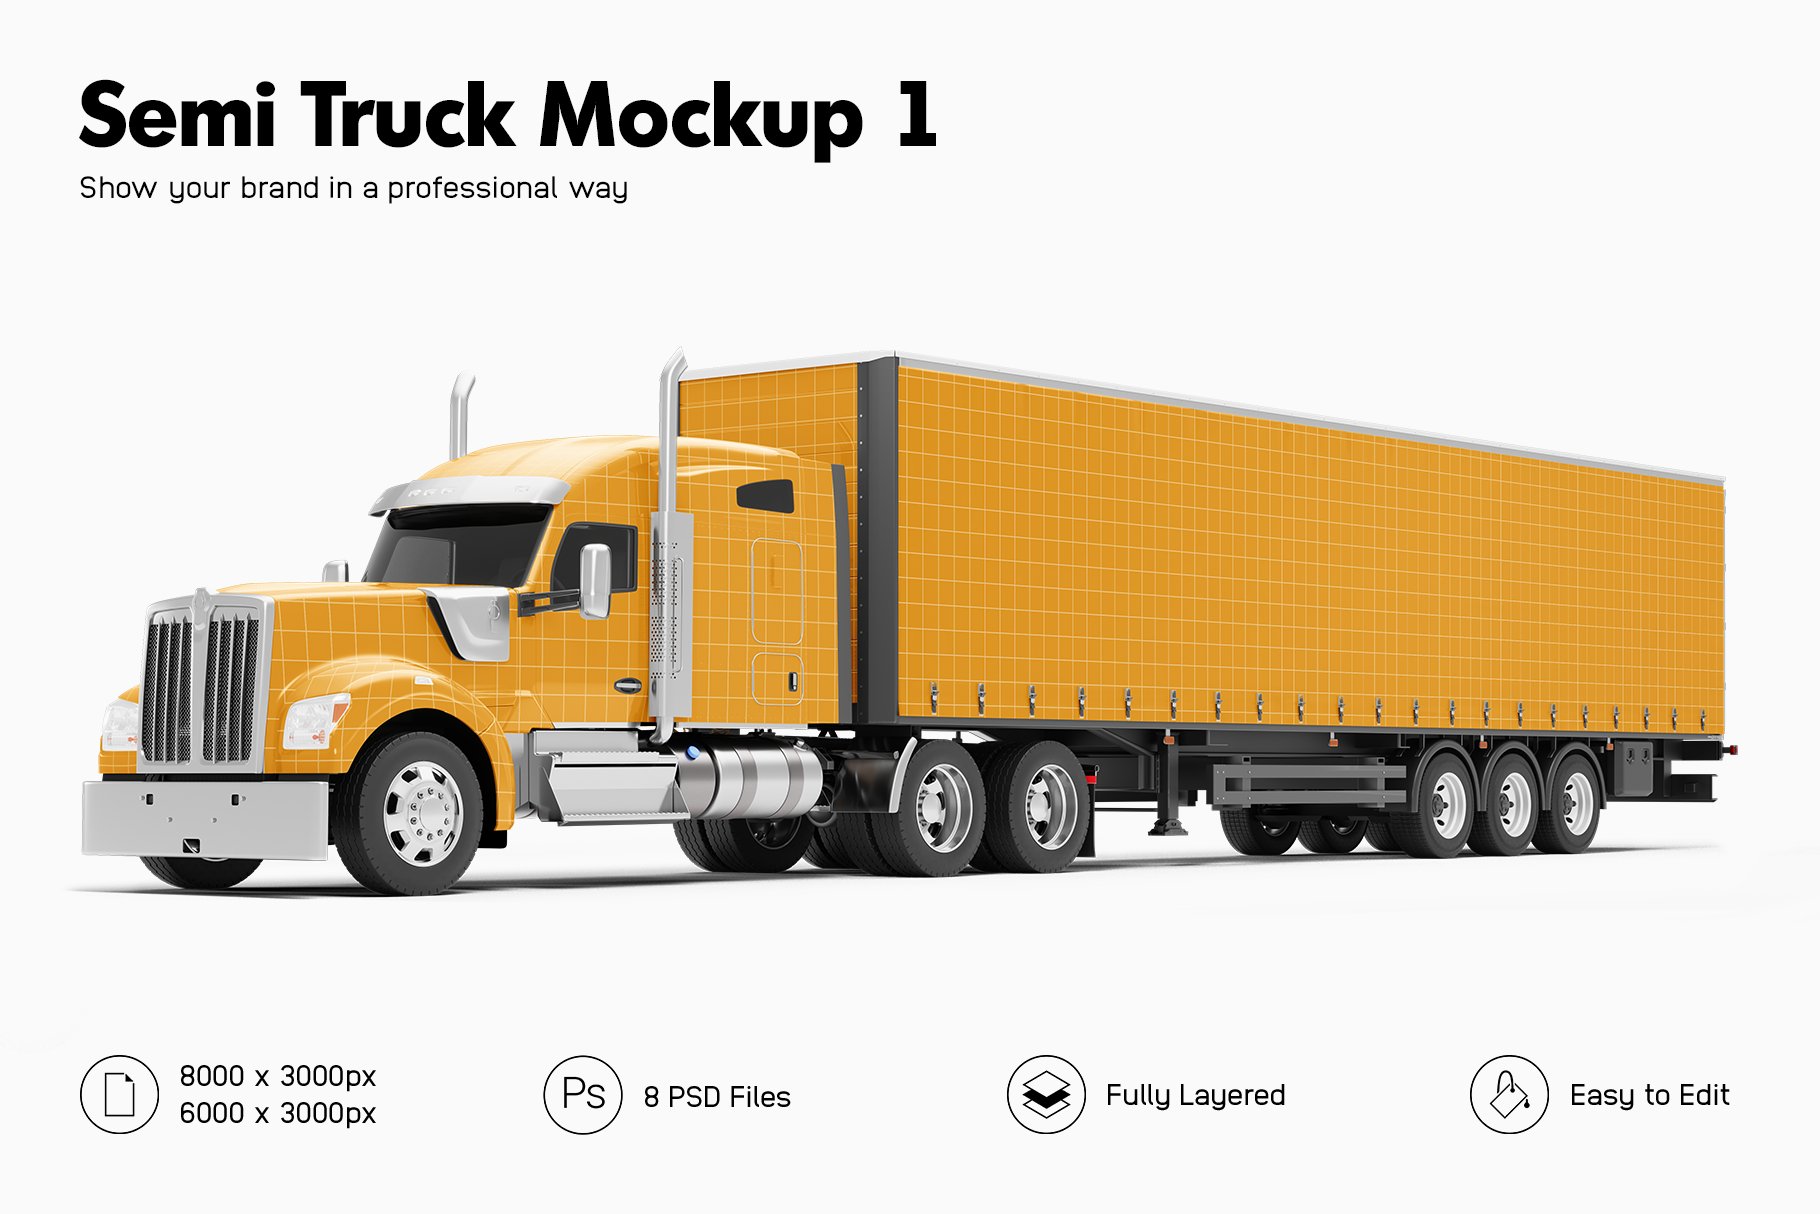 Semi Truck Mockup 1 cover image.